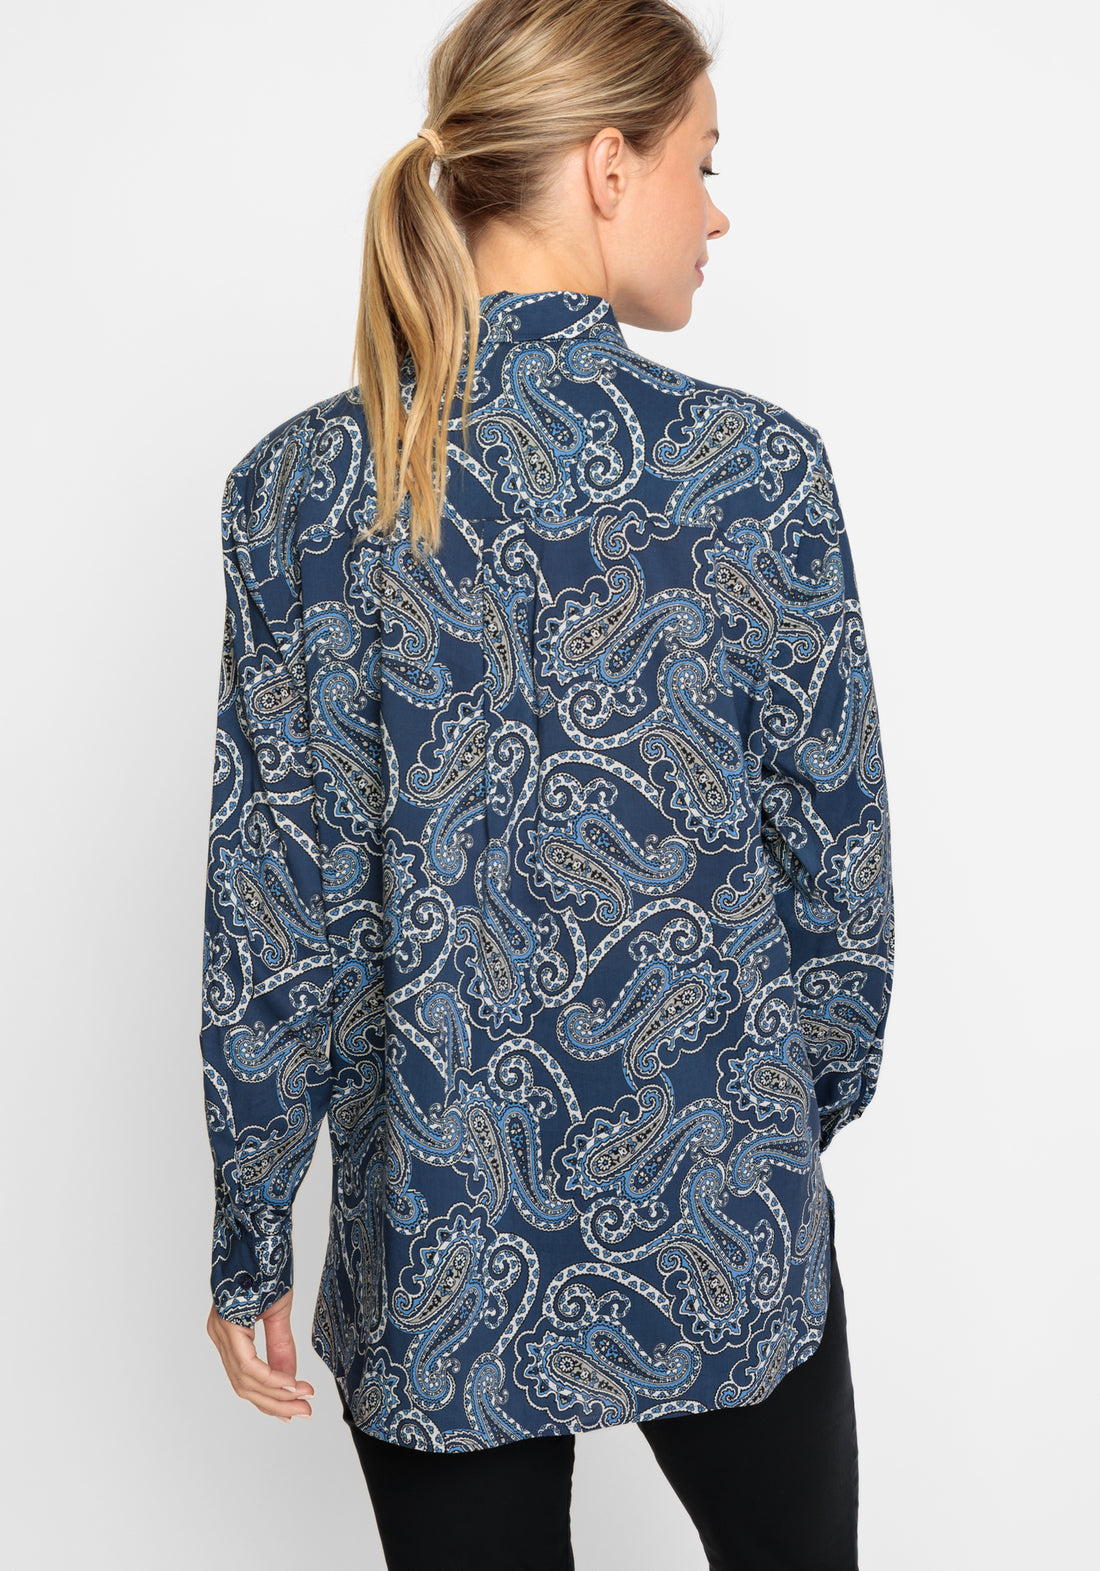 Olsen - Paisley Print Long Sleeve Button Up Shirt